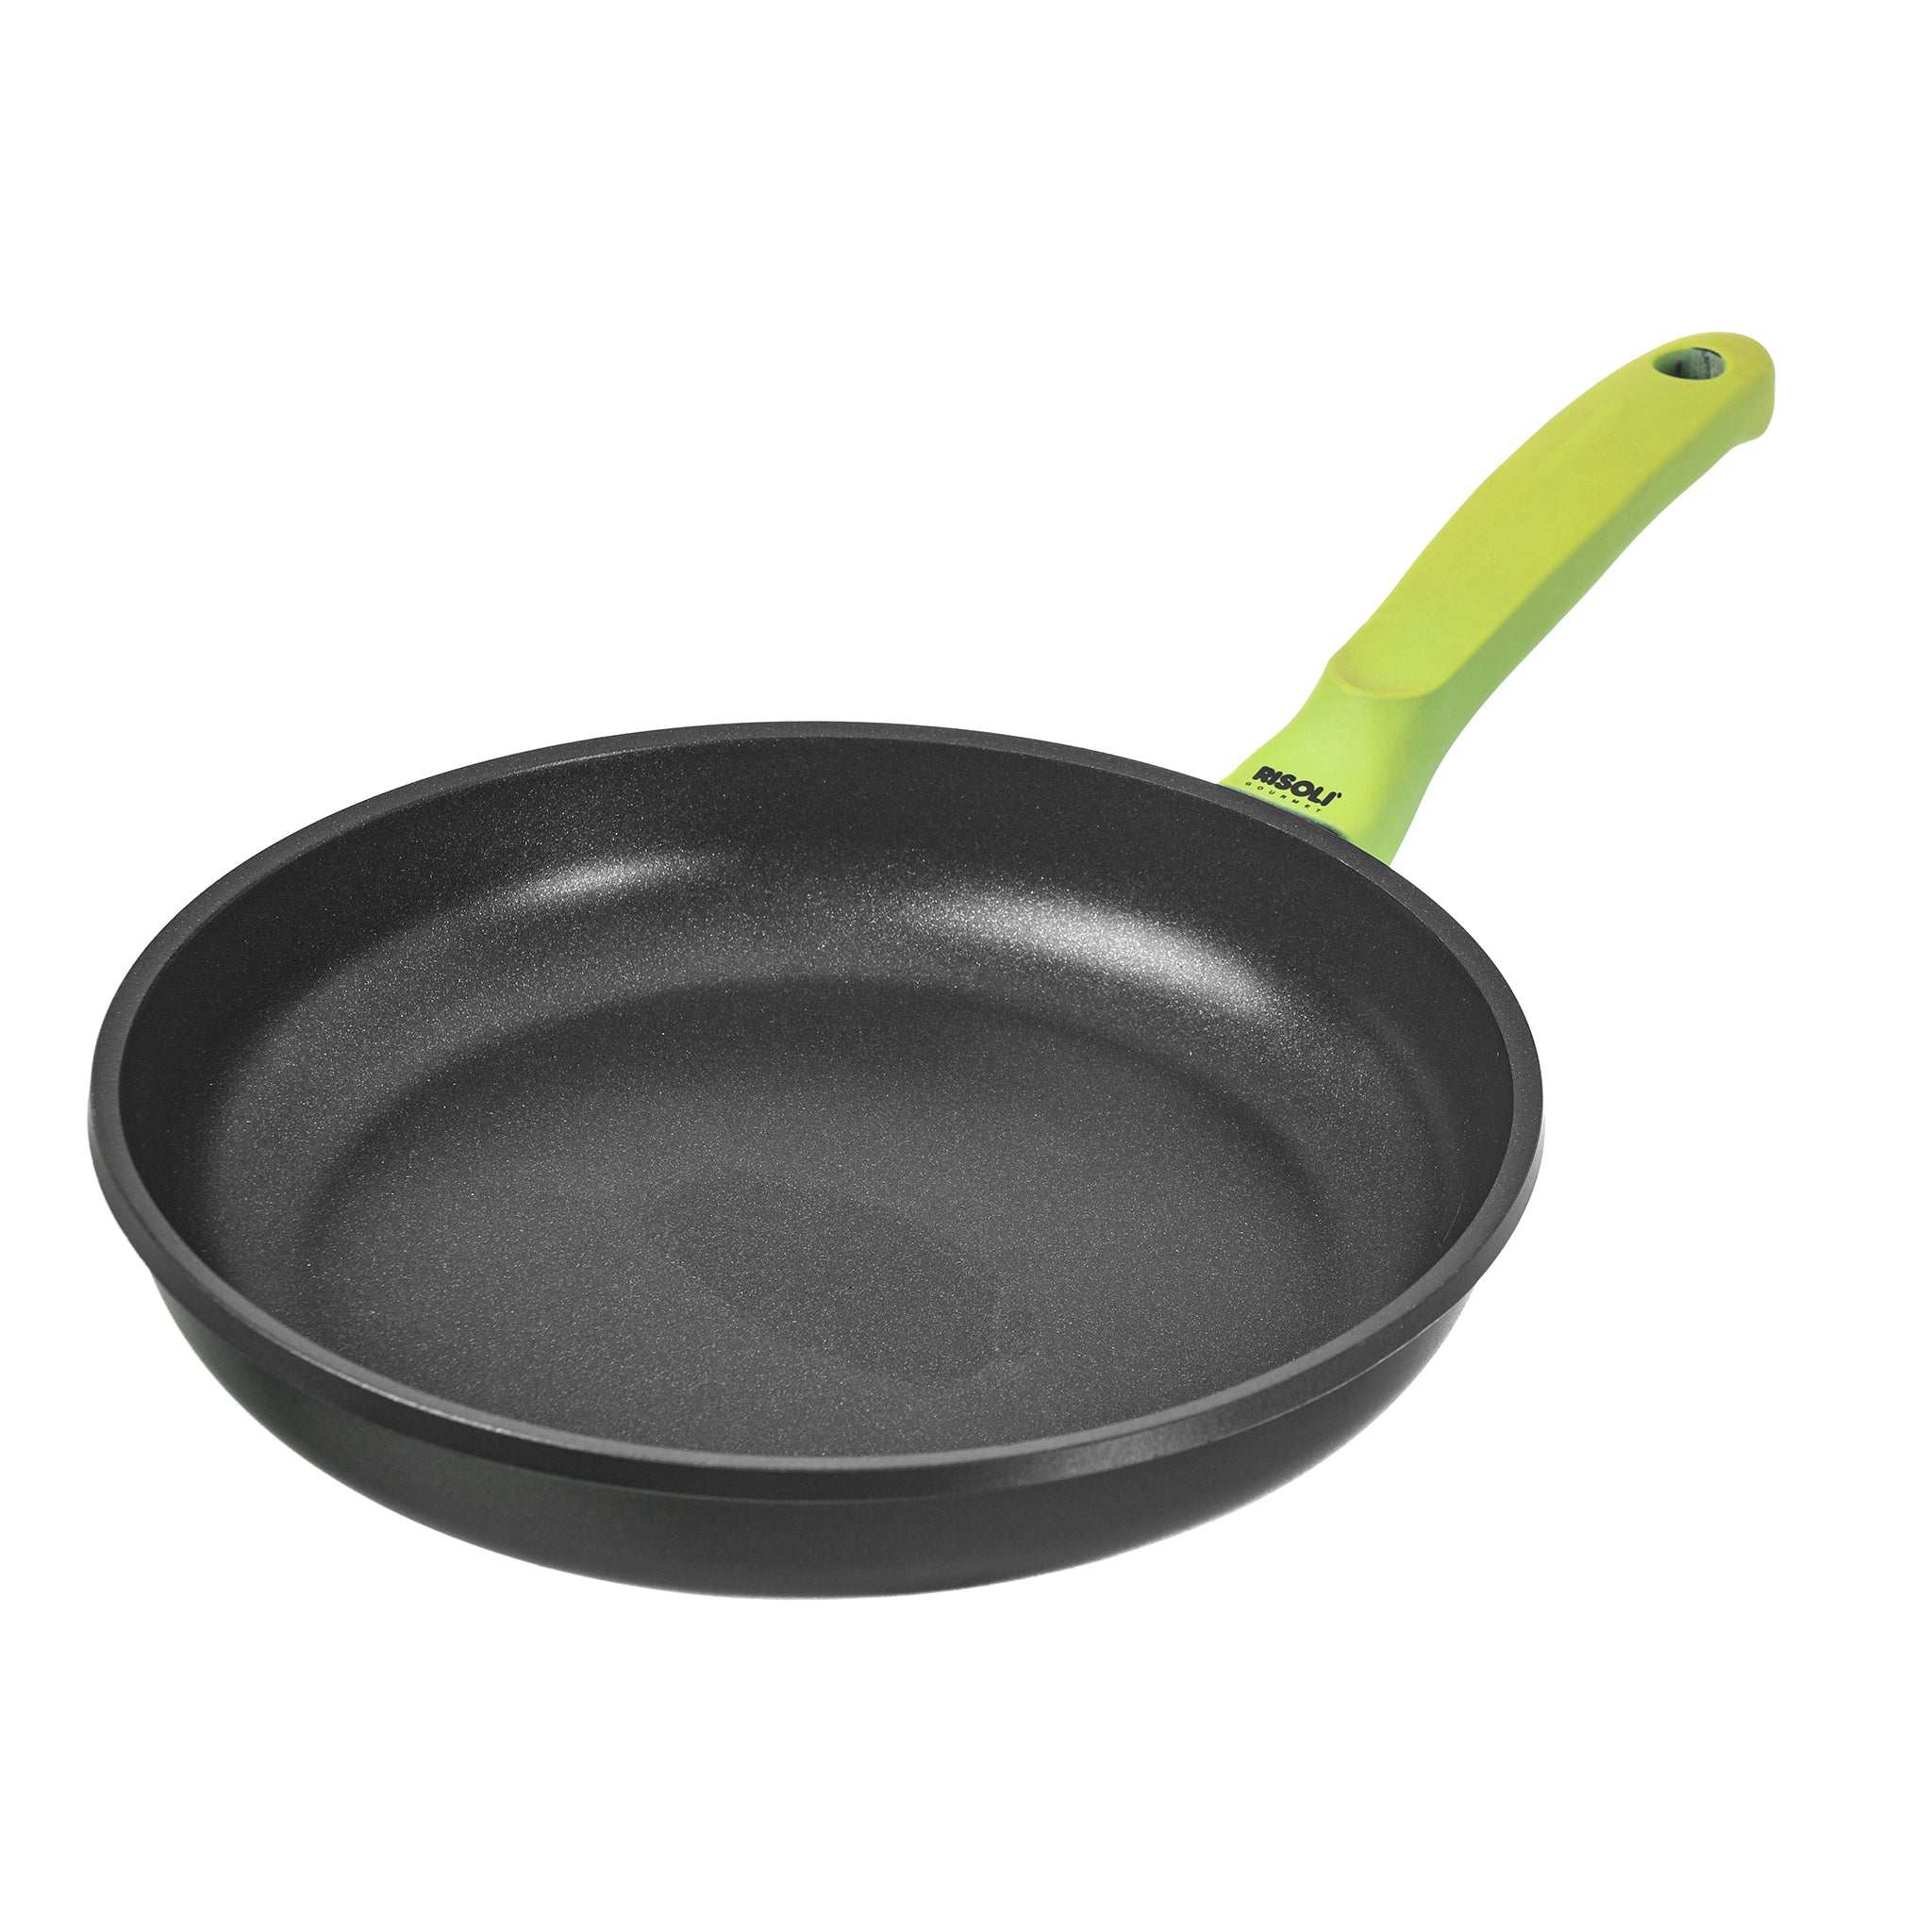 Risoli - Black Fry Pan with Green Handle - 36 cm - Black - 44000358